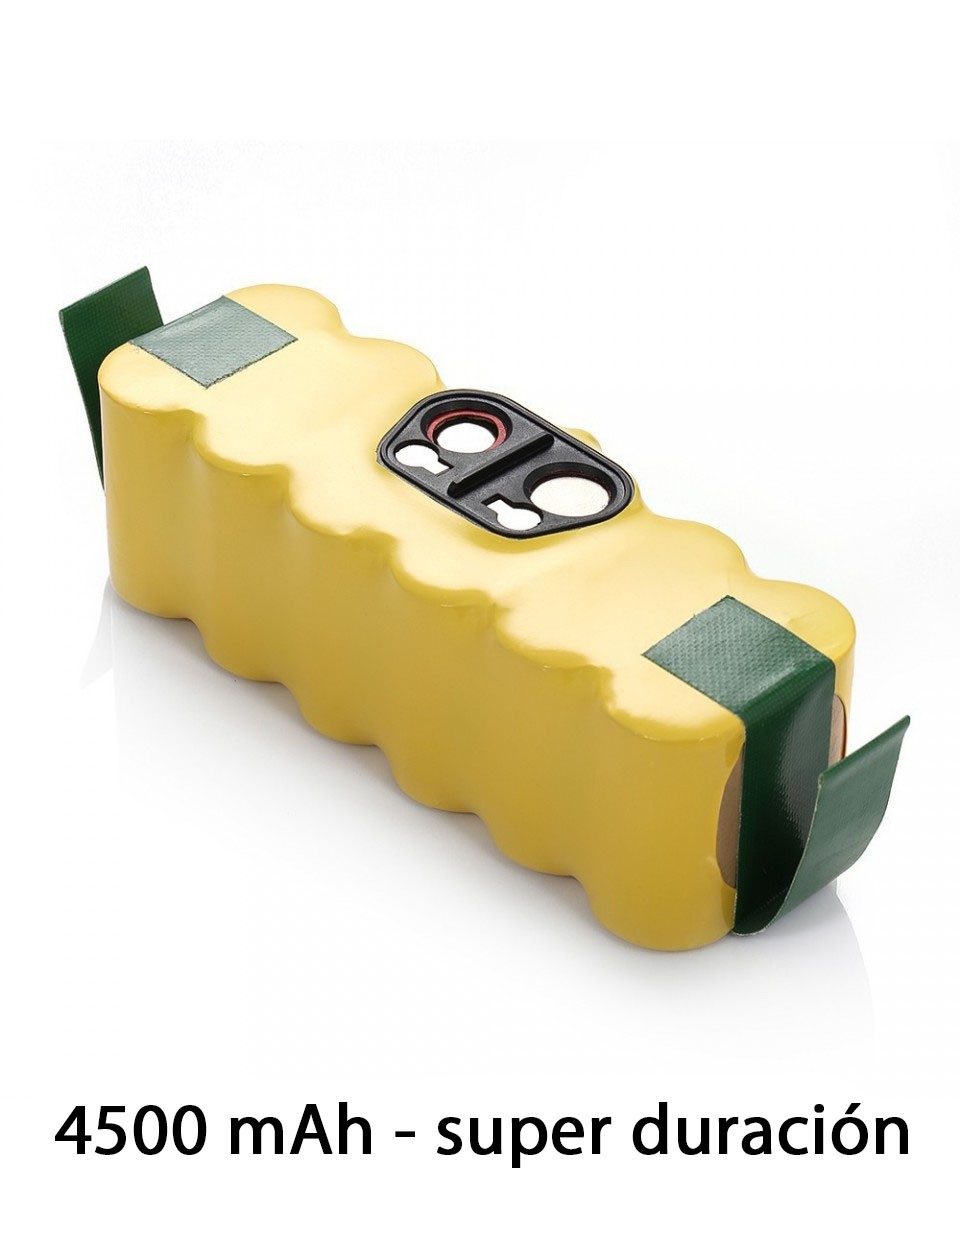 Batería más potente: 4500mAh compatible Roomba Irobot serie 500, 600, 700,  800… – Bateria Premium para Robots Aspiradores Roomba iRobot de larga  duración y alta calidad (HQ)